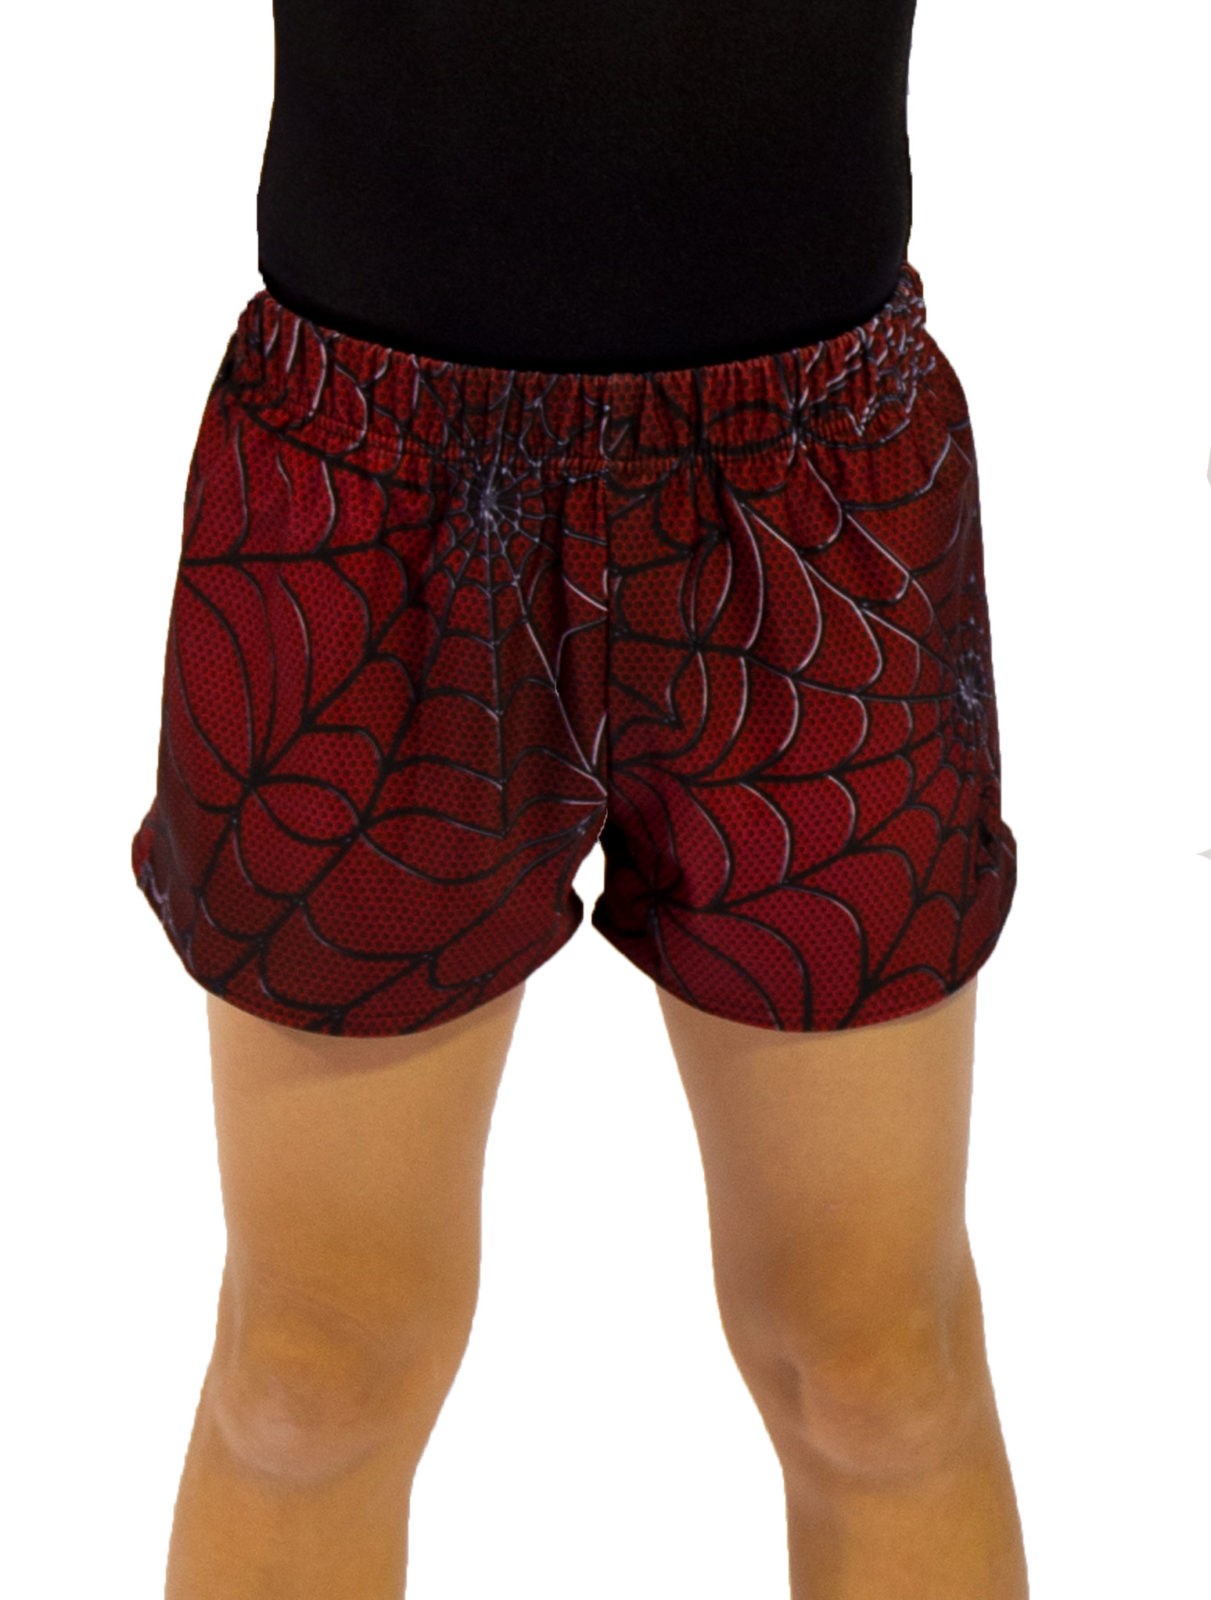 Red Spiderman Boys Training Shorts - A Star Leotards